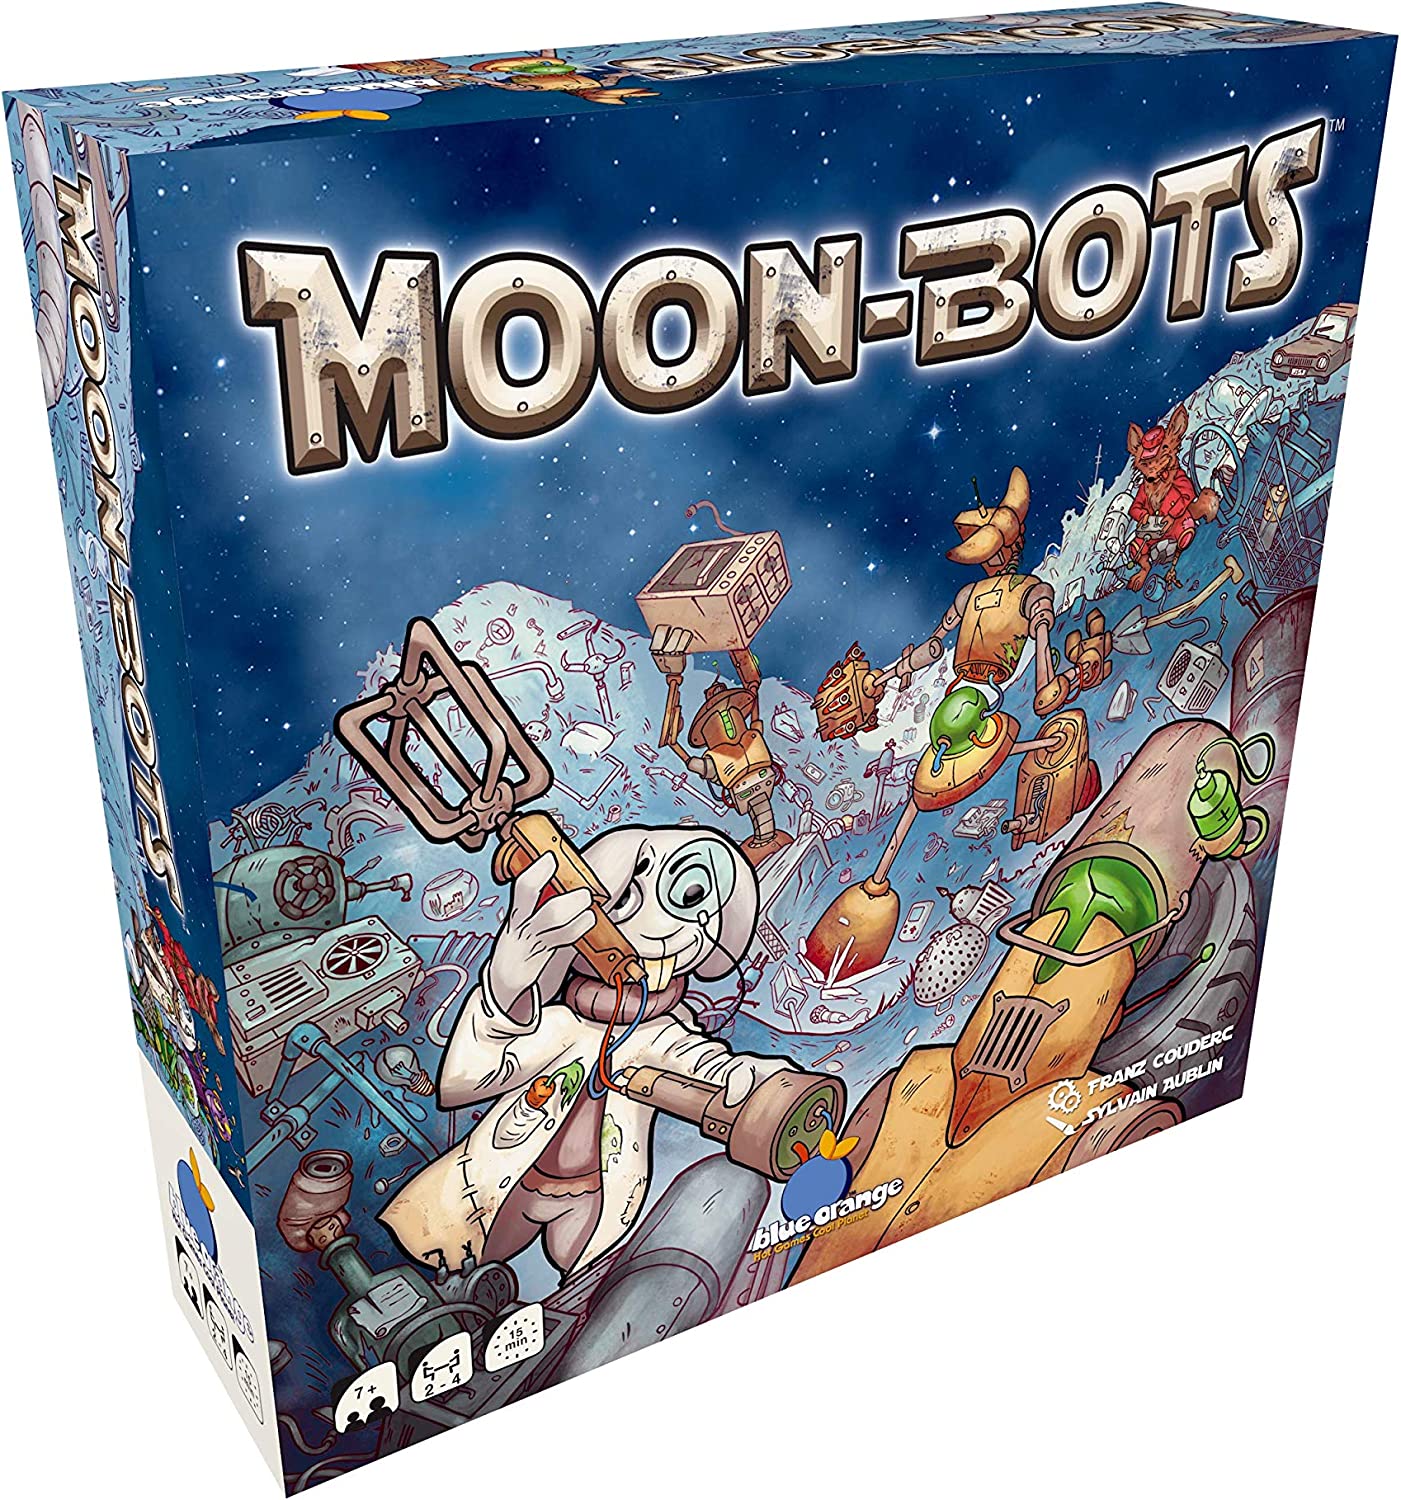 Moon-Bots